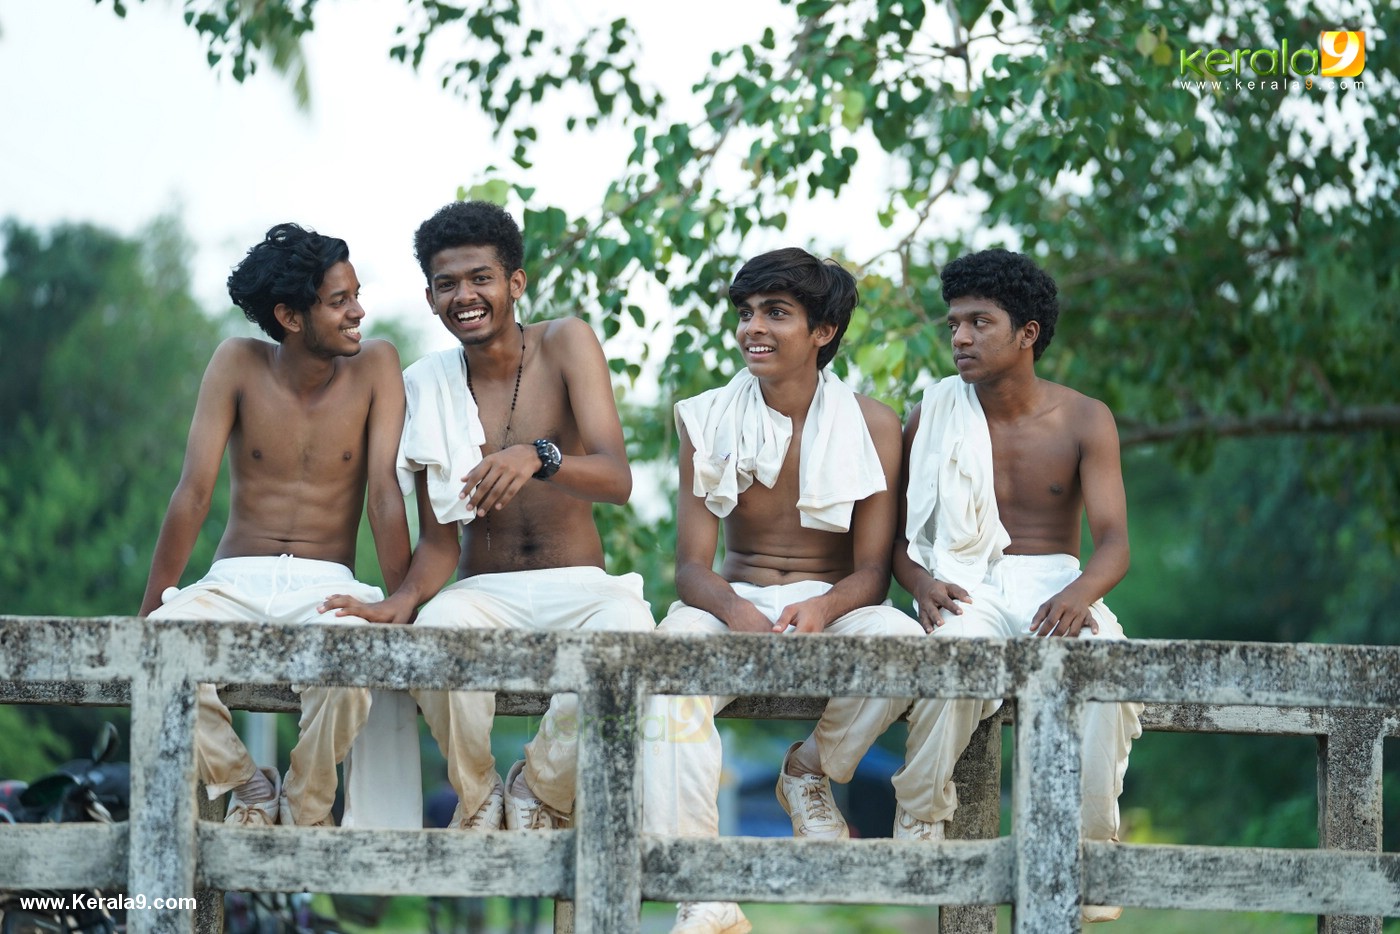 thanneer mathan dinangal movie stills 001 - Kerala9.com